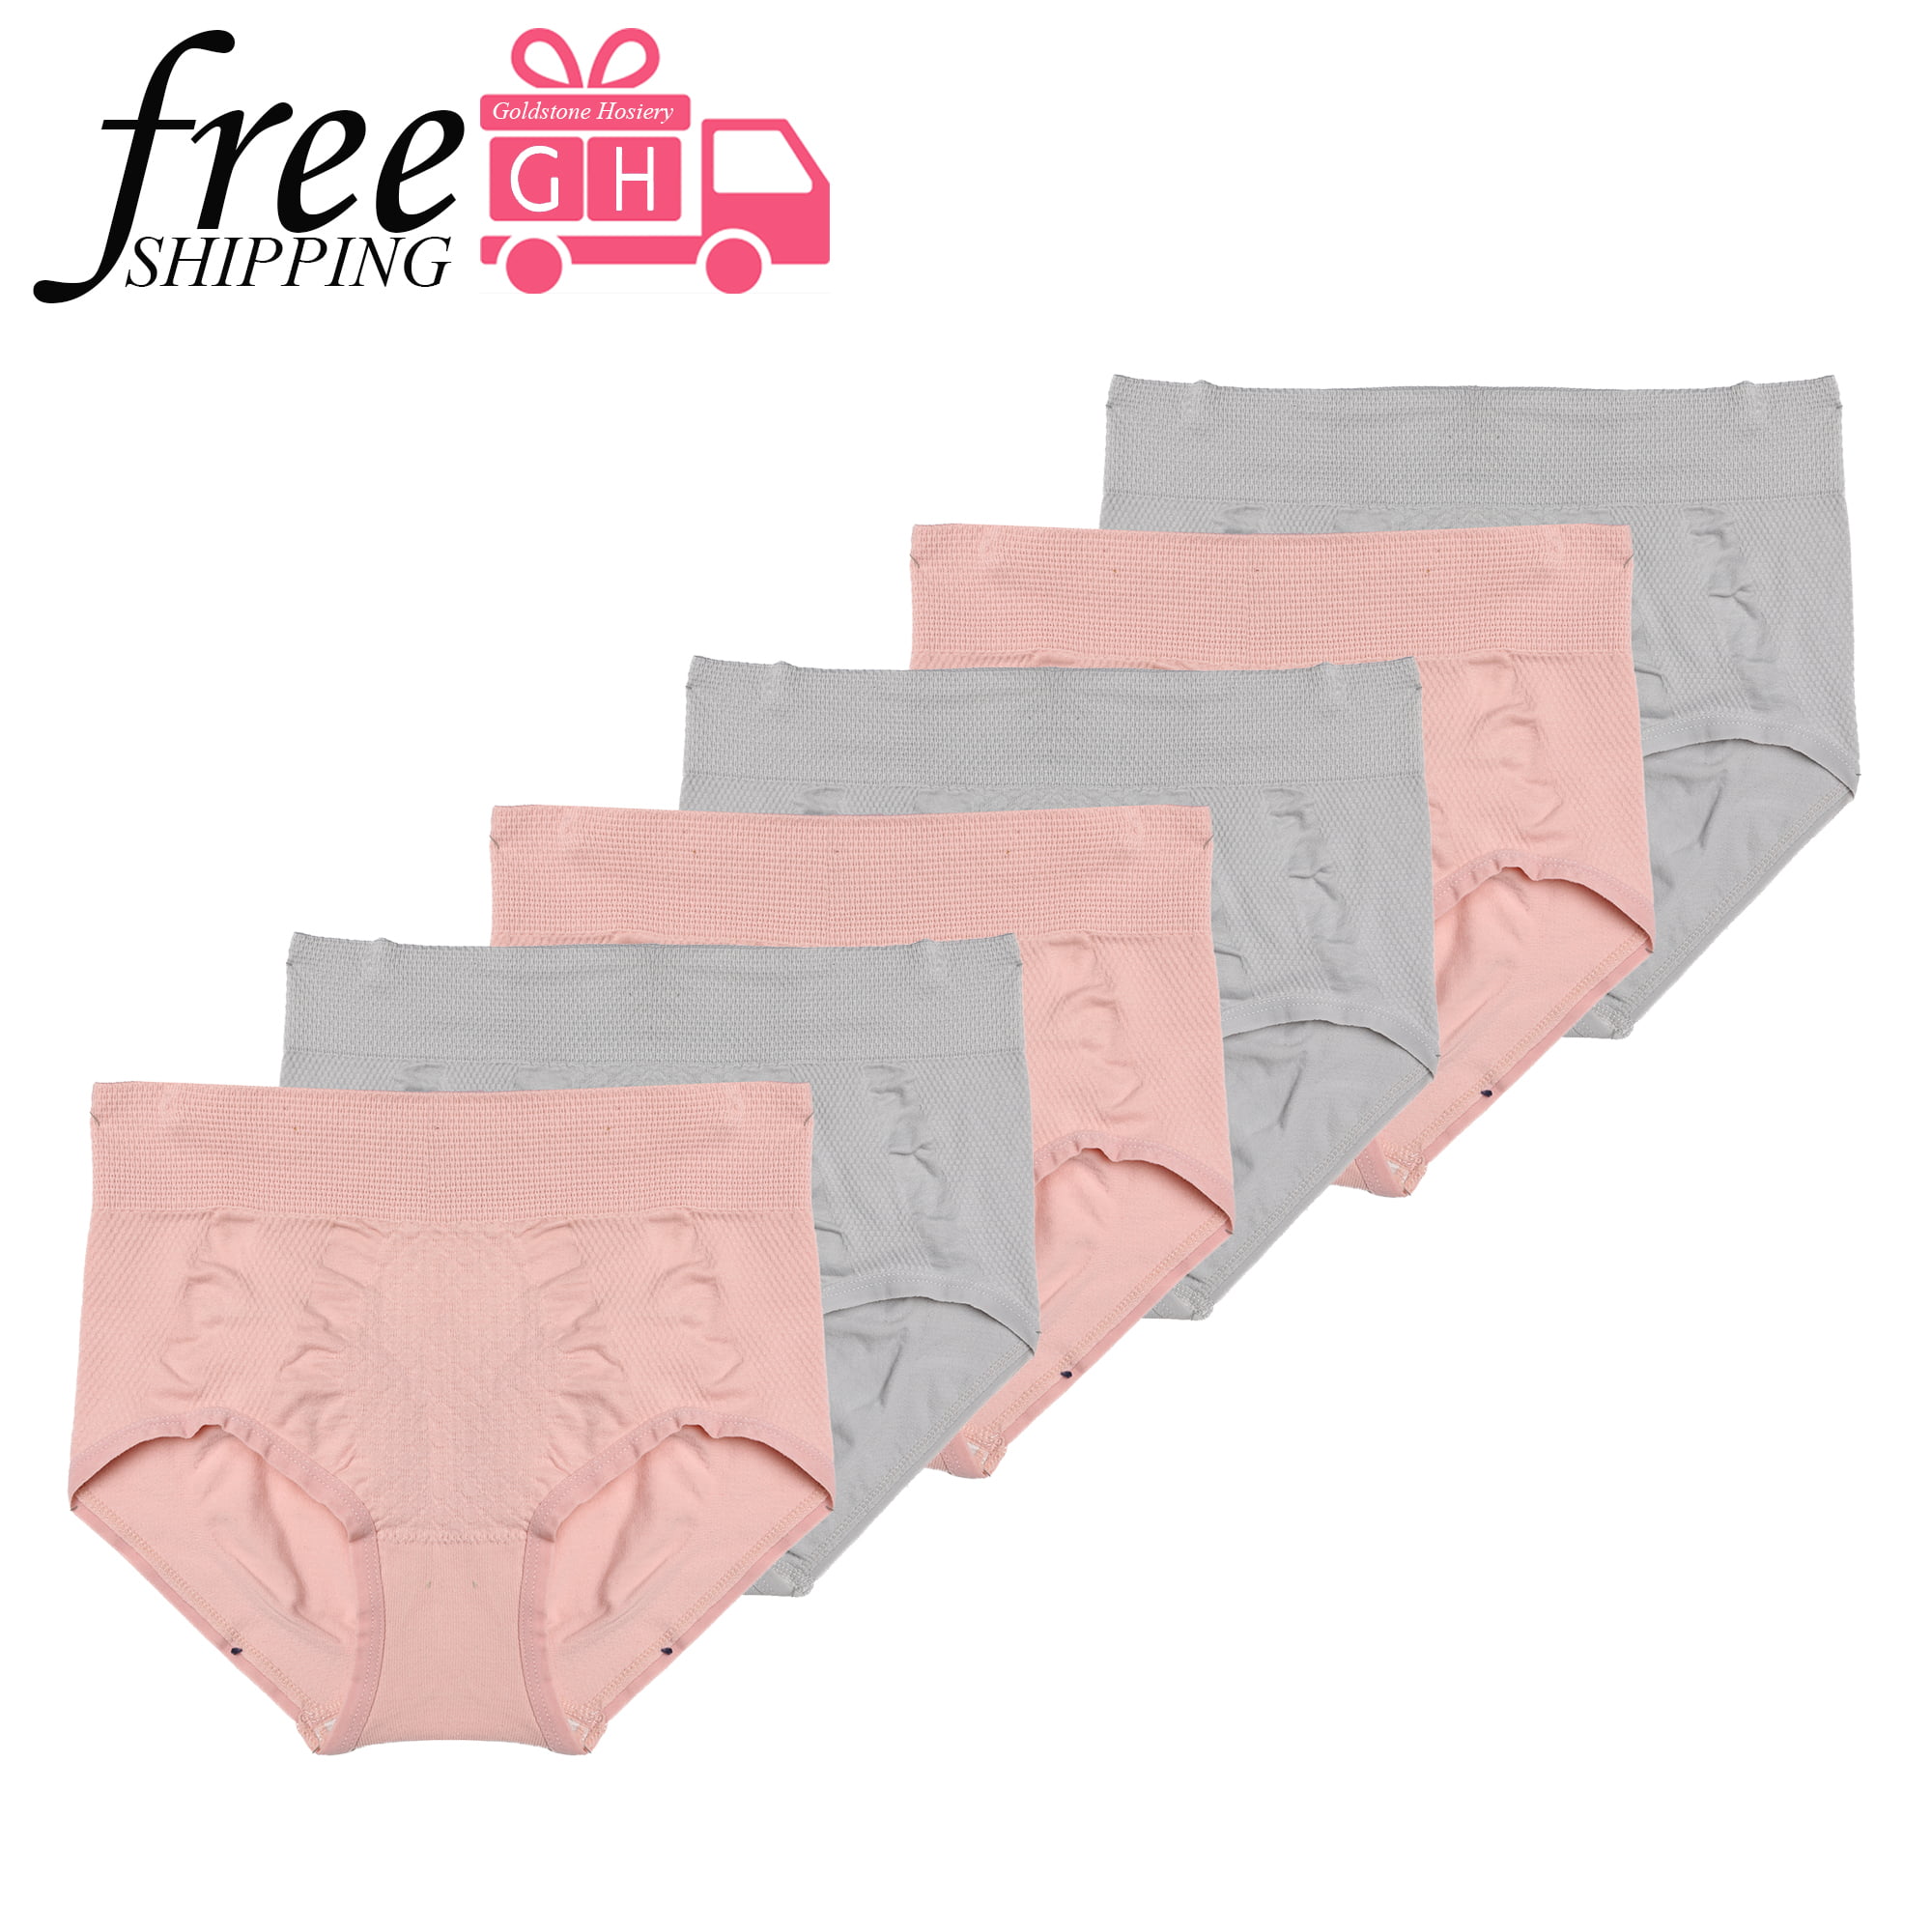 Plus Size XXXL Sheer Nylon Panties Briefs Underwear Men Lady Comfort Diaper Lot